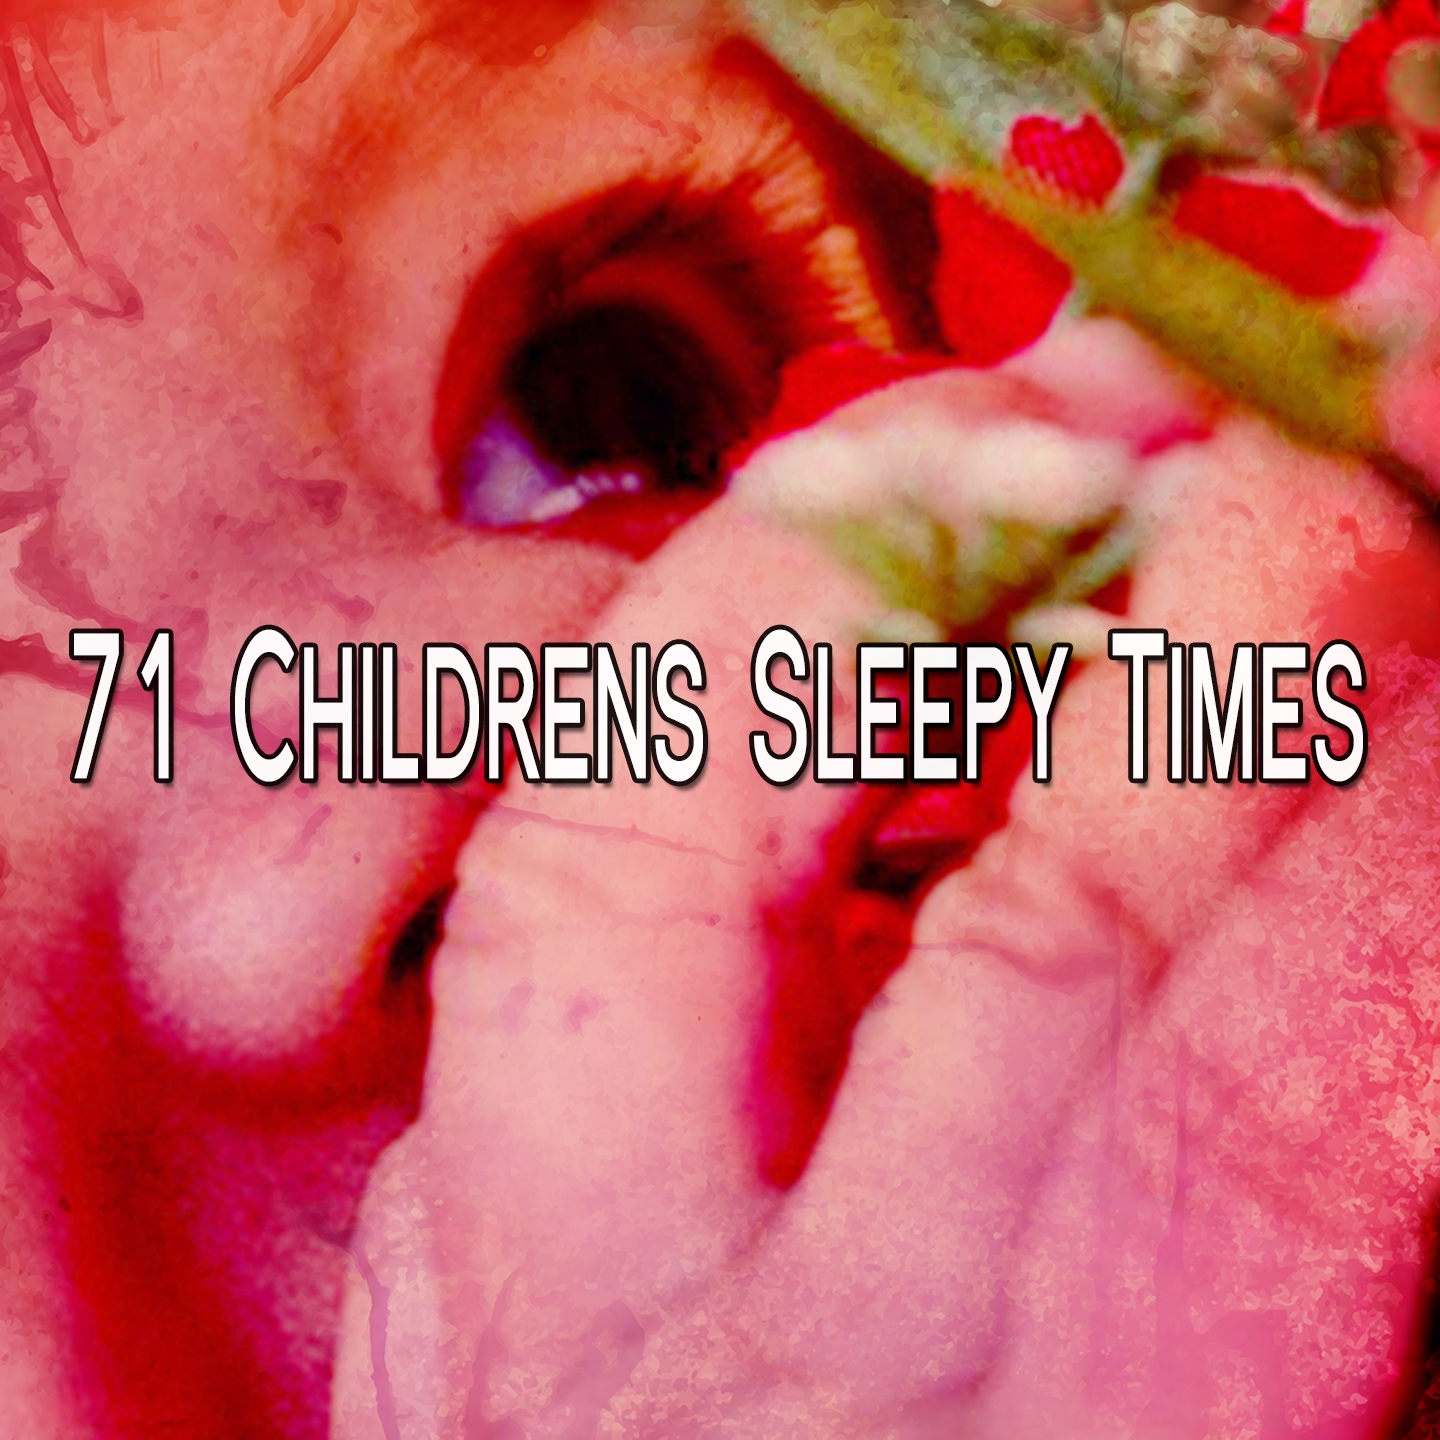 71 Childrens Sleepy Times